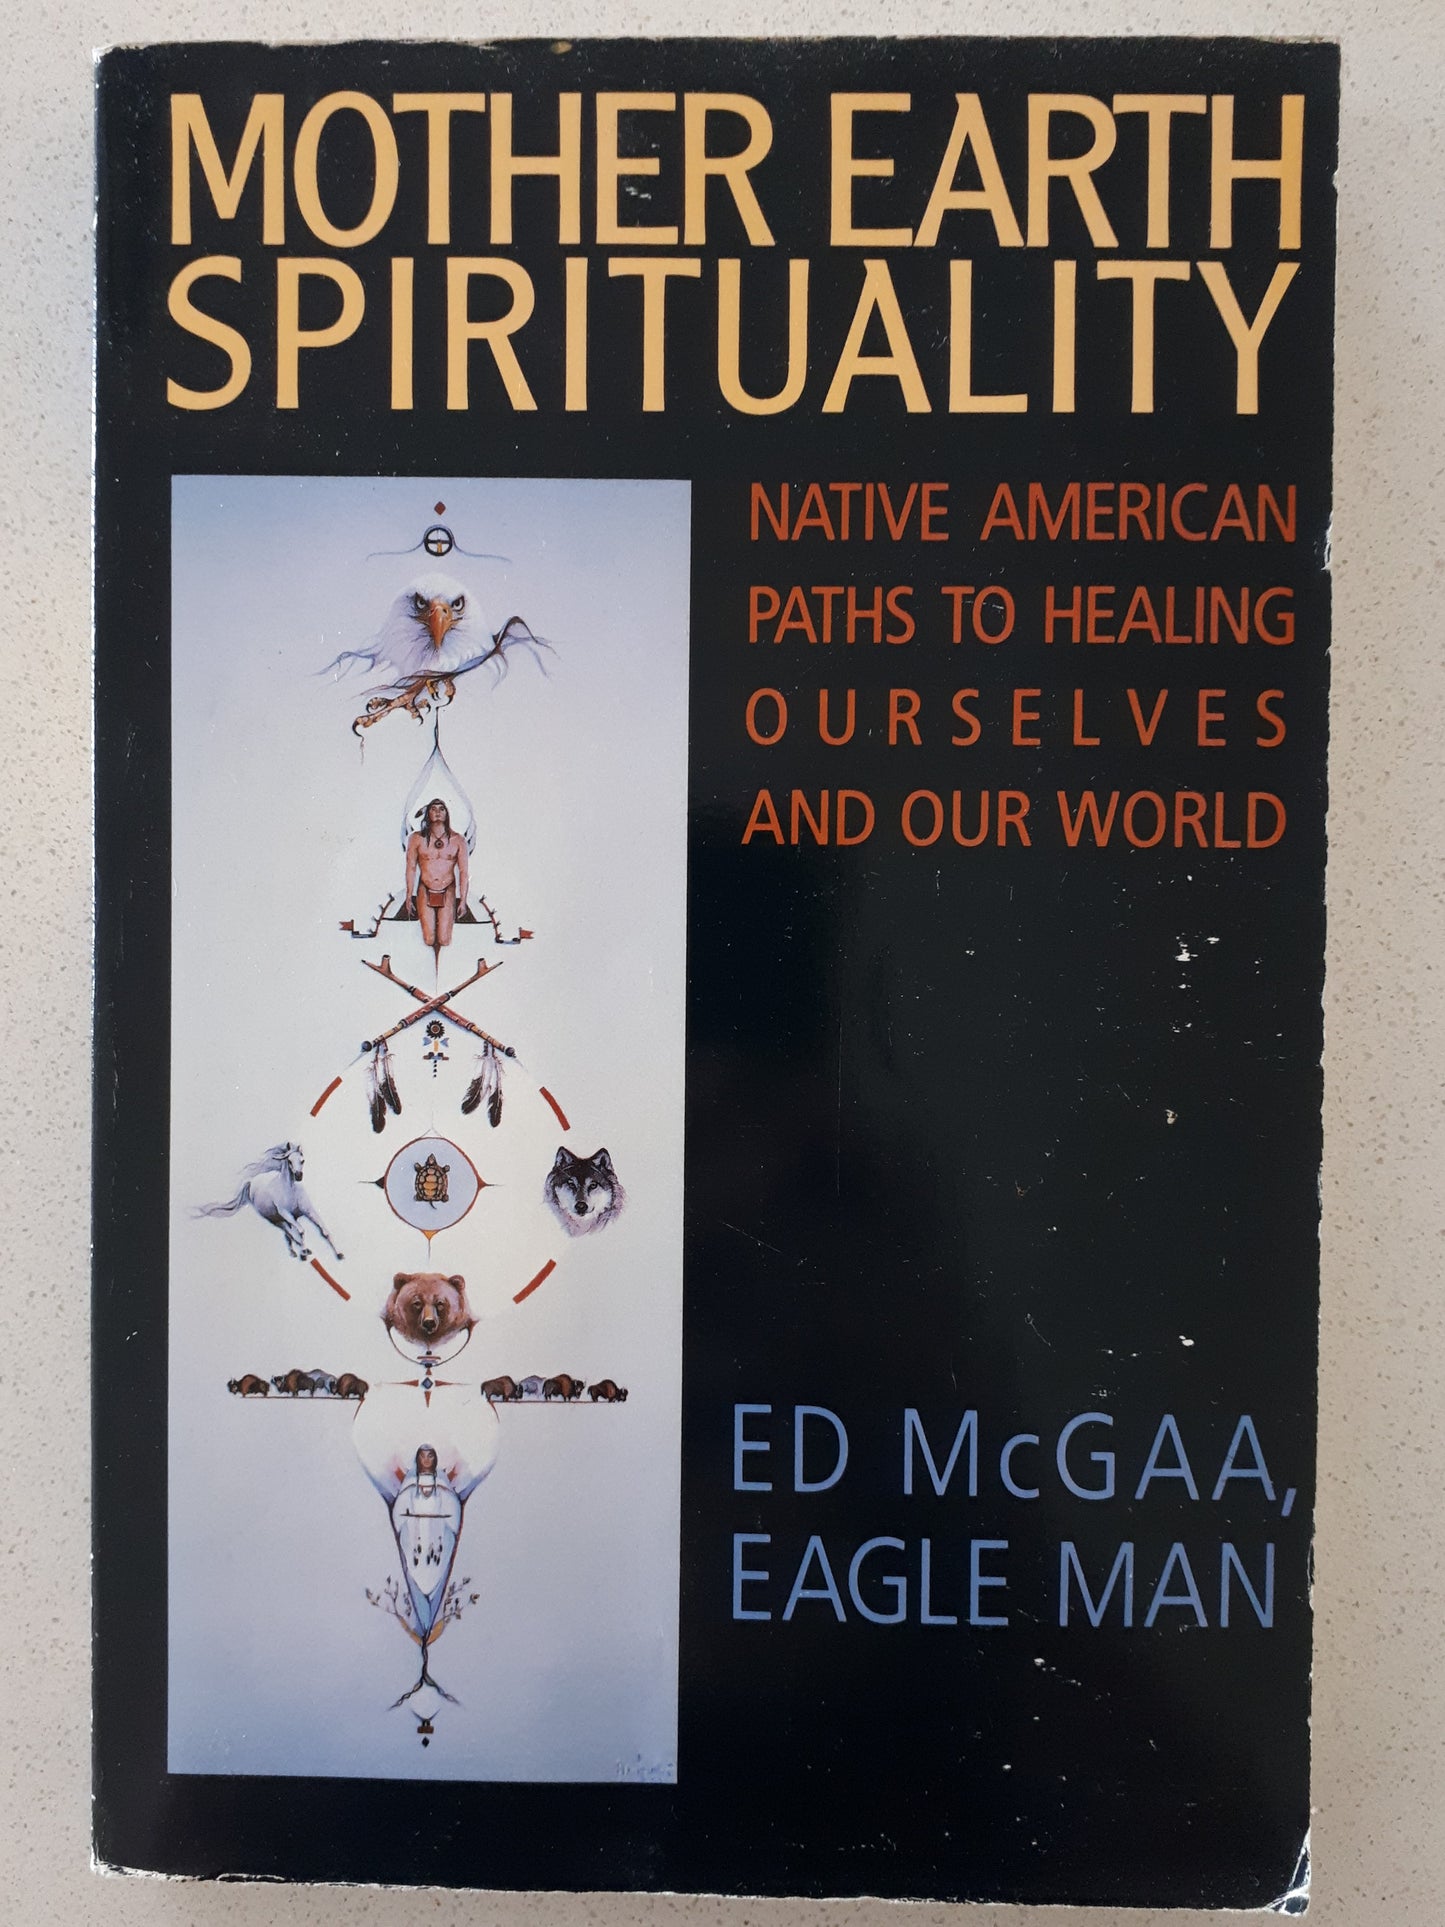 Mother Earth Spirituality by Ed McGaa, Eagle Man